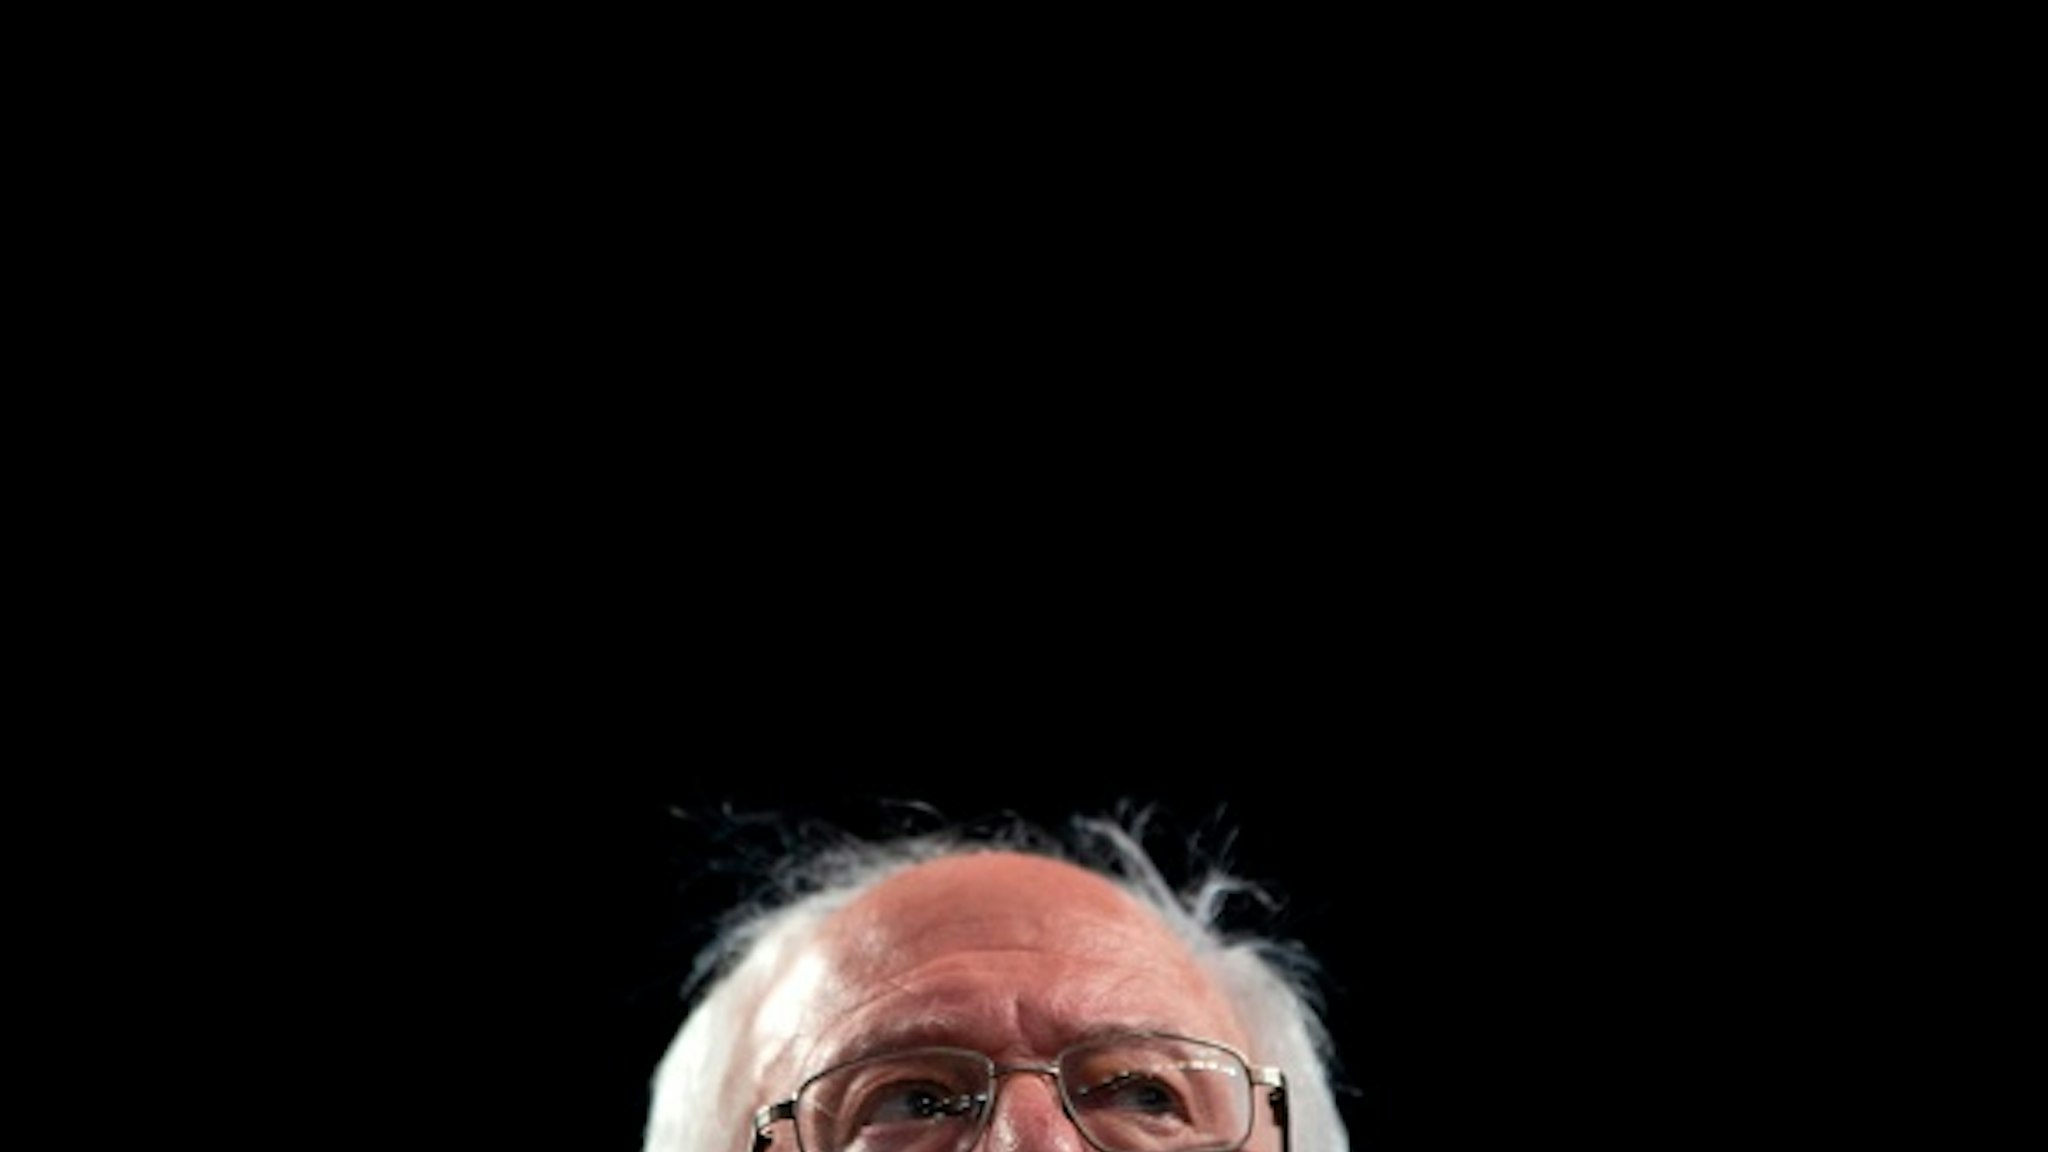 Democratic presidential hopeful Vermont Senator Bernie Sanders speaks during a rally at Houston University in Houston, Texas on February 23, 2020.